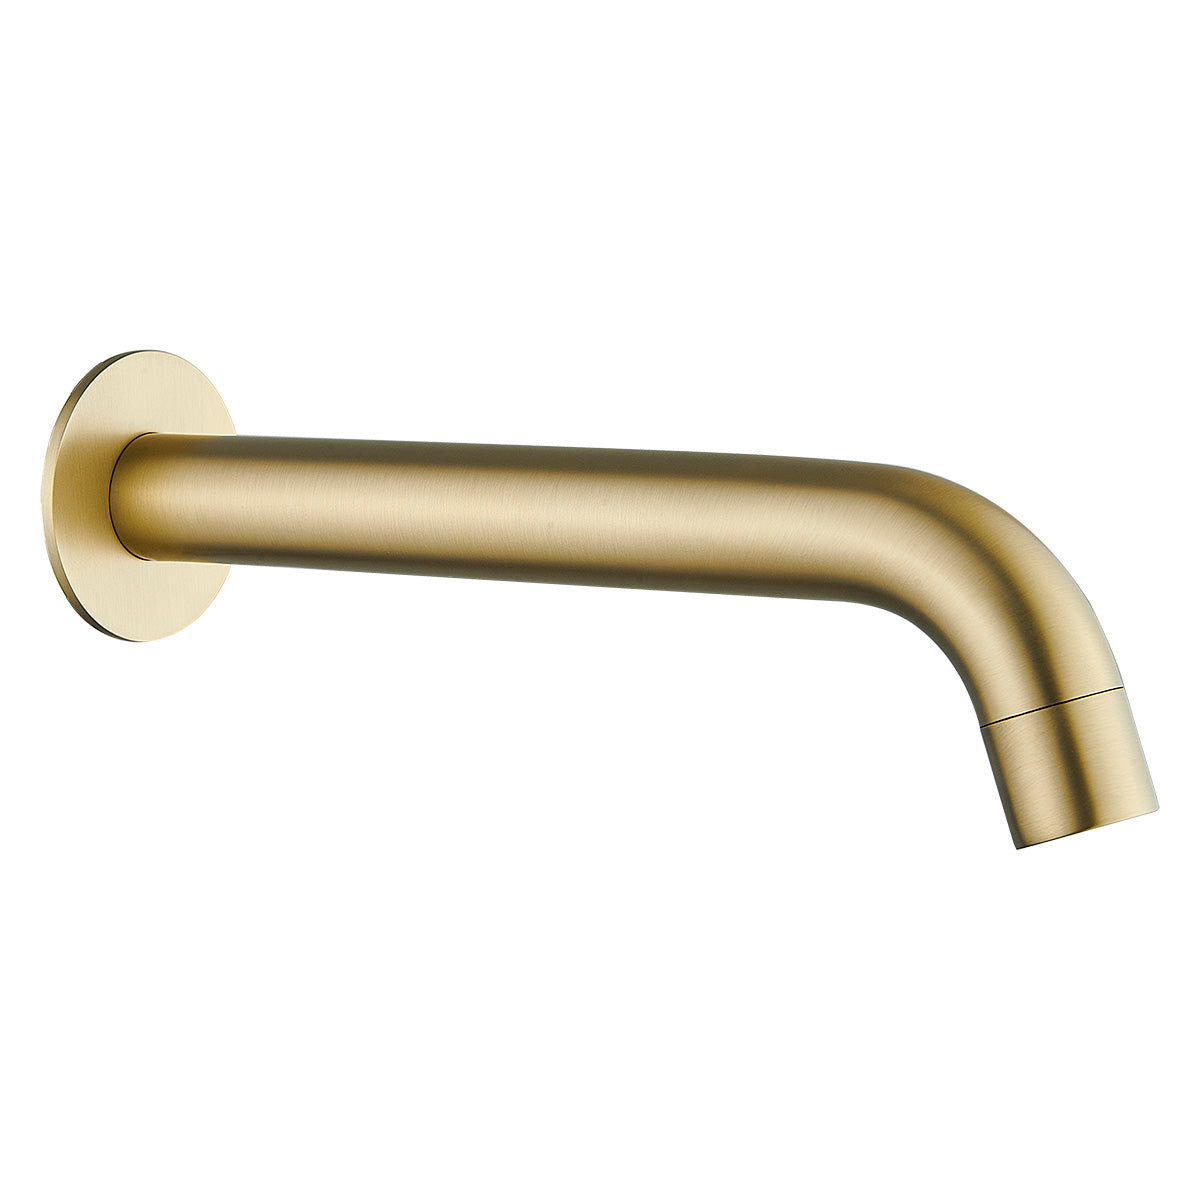 IDCS1 (BG) / Ideal Bath Outlet (Brushed Gold) 200mm - Hellycar Brushed Gold Bath Spout